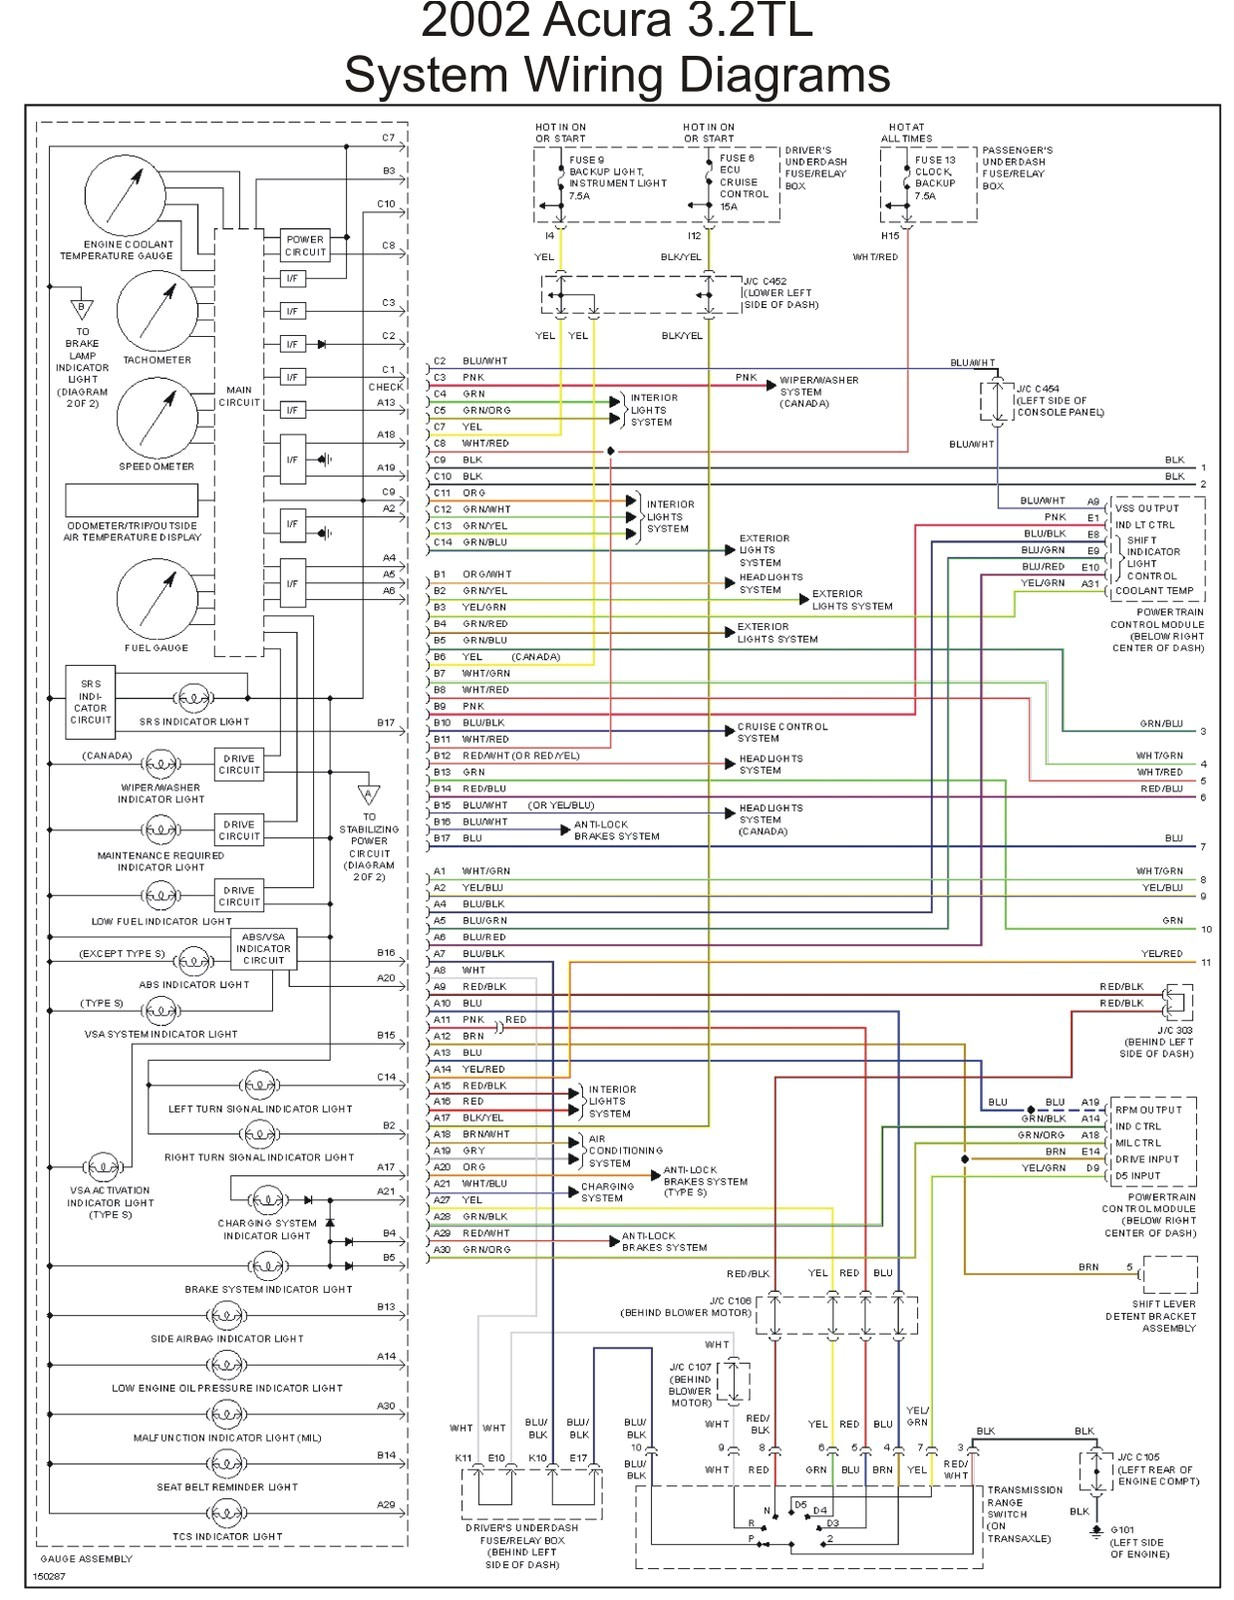 1995 Acura Integra Wiring Diagram 94 Integra Wiring Diagram Wiring Diagram